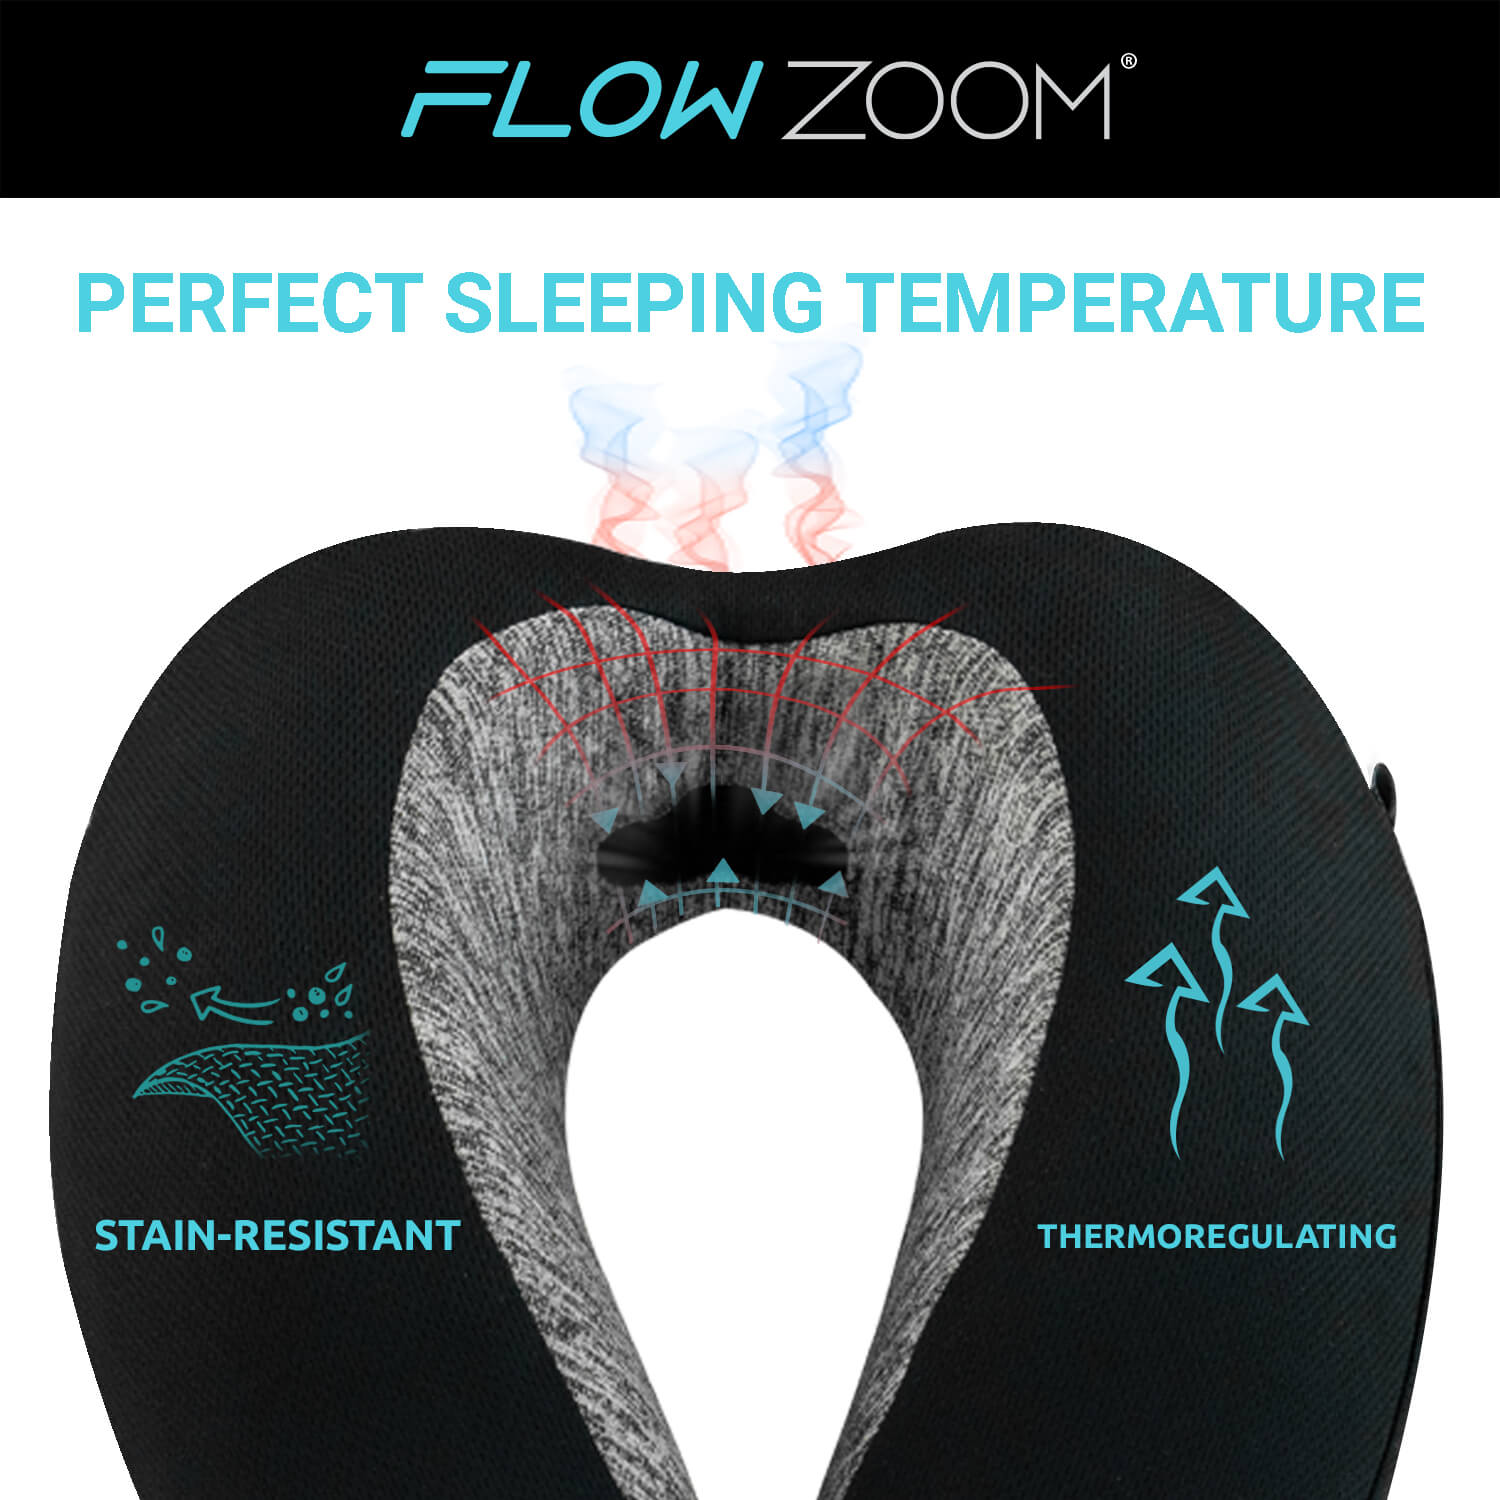 DREAM Memory Foam Pillow for perfect sleeping temperature